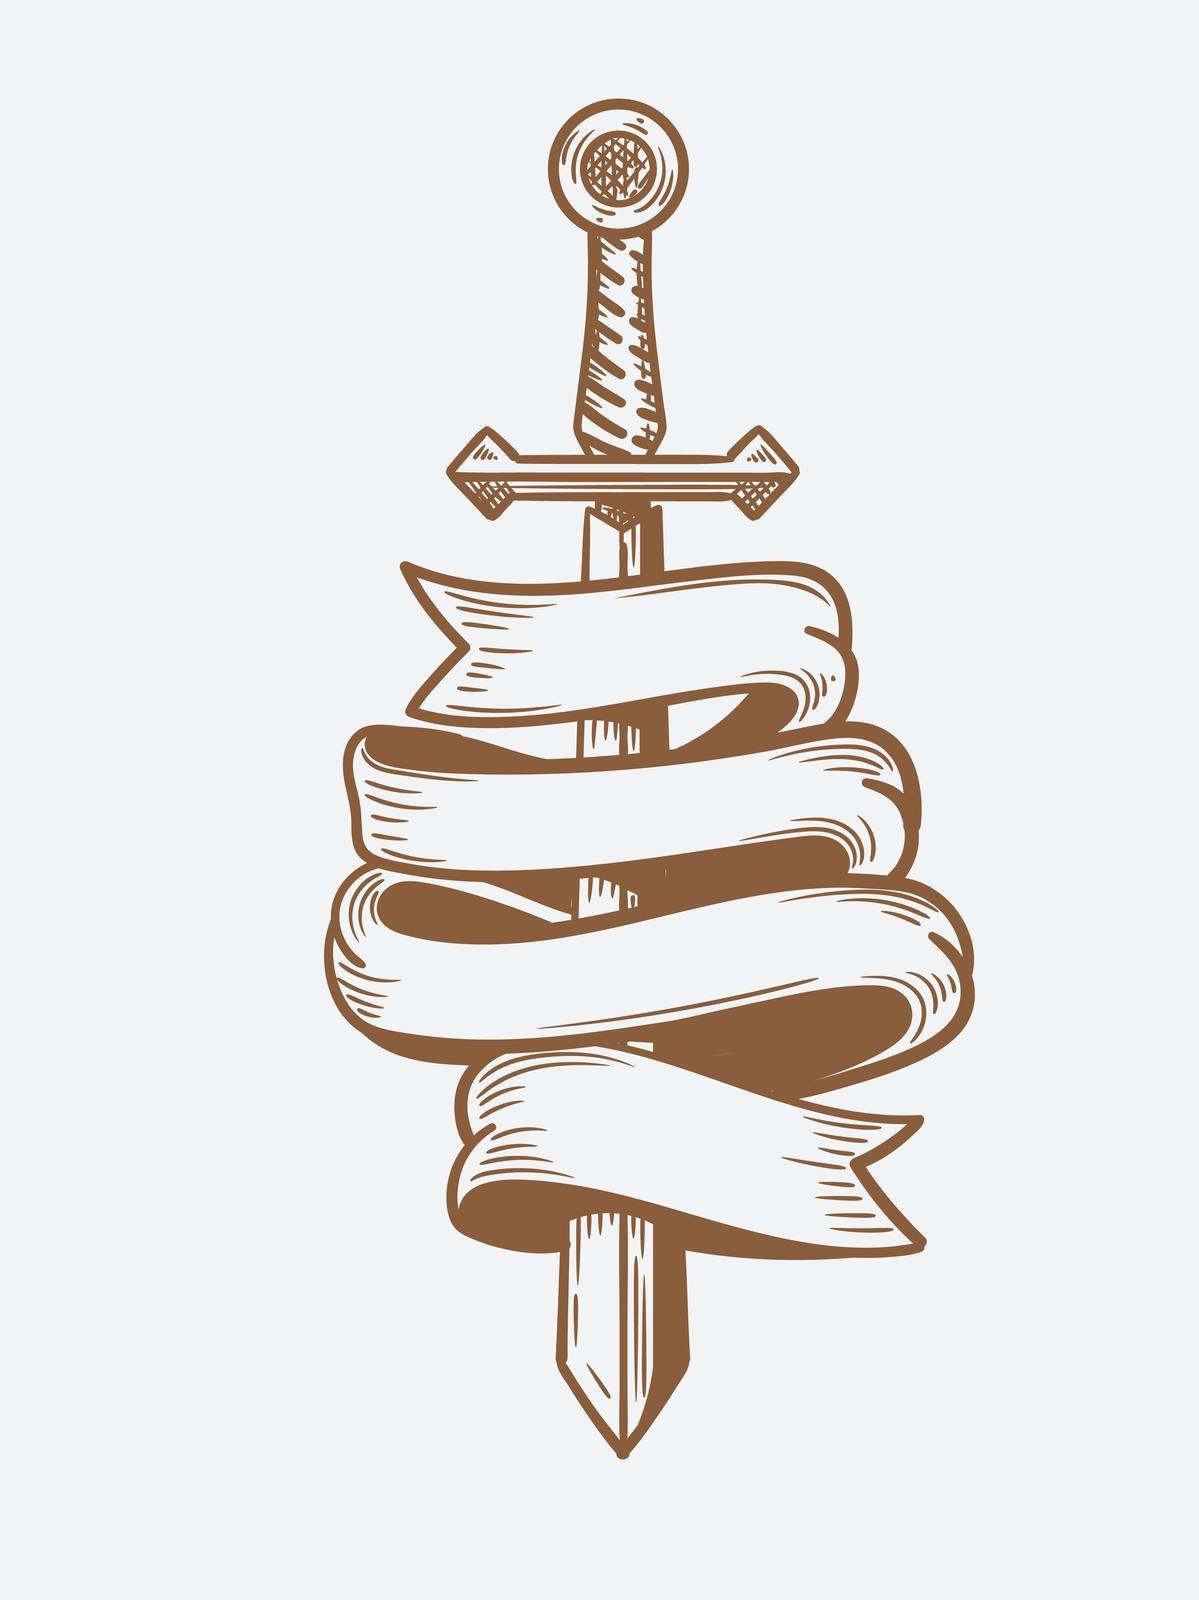 Ribbon wrapped sword Hand drawn vector illustration.